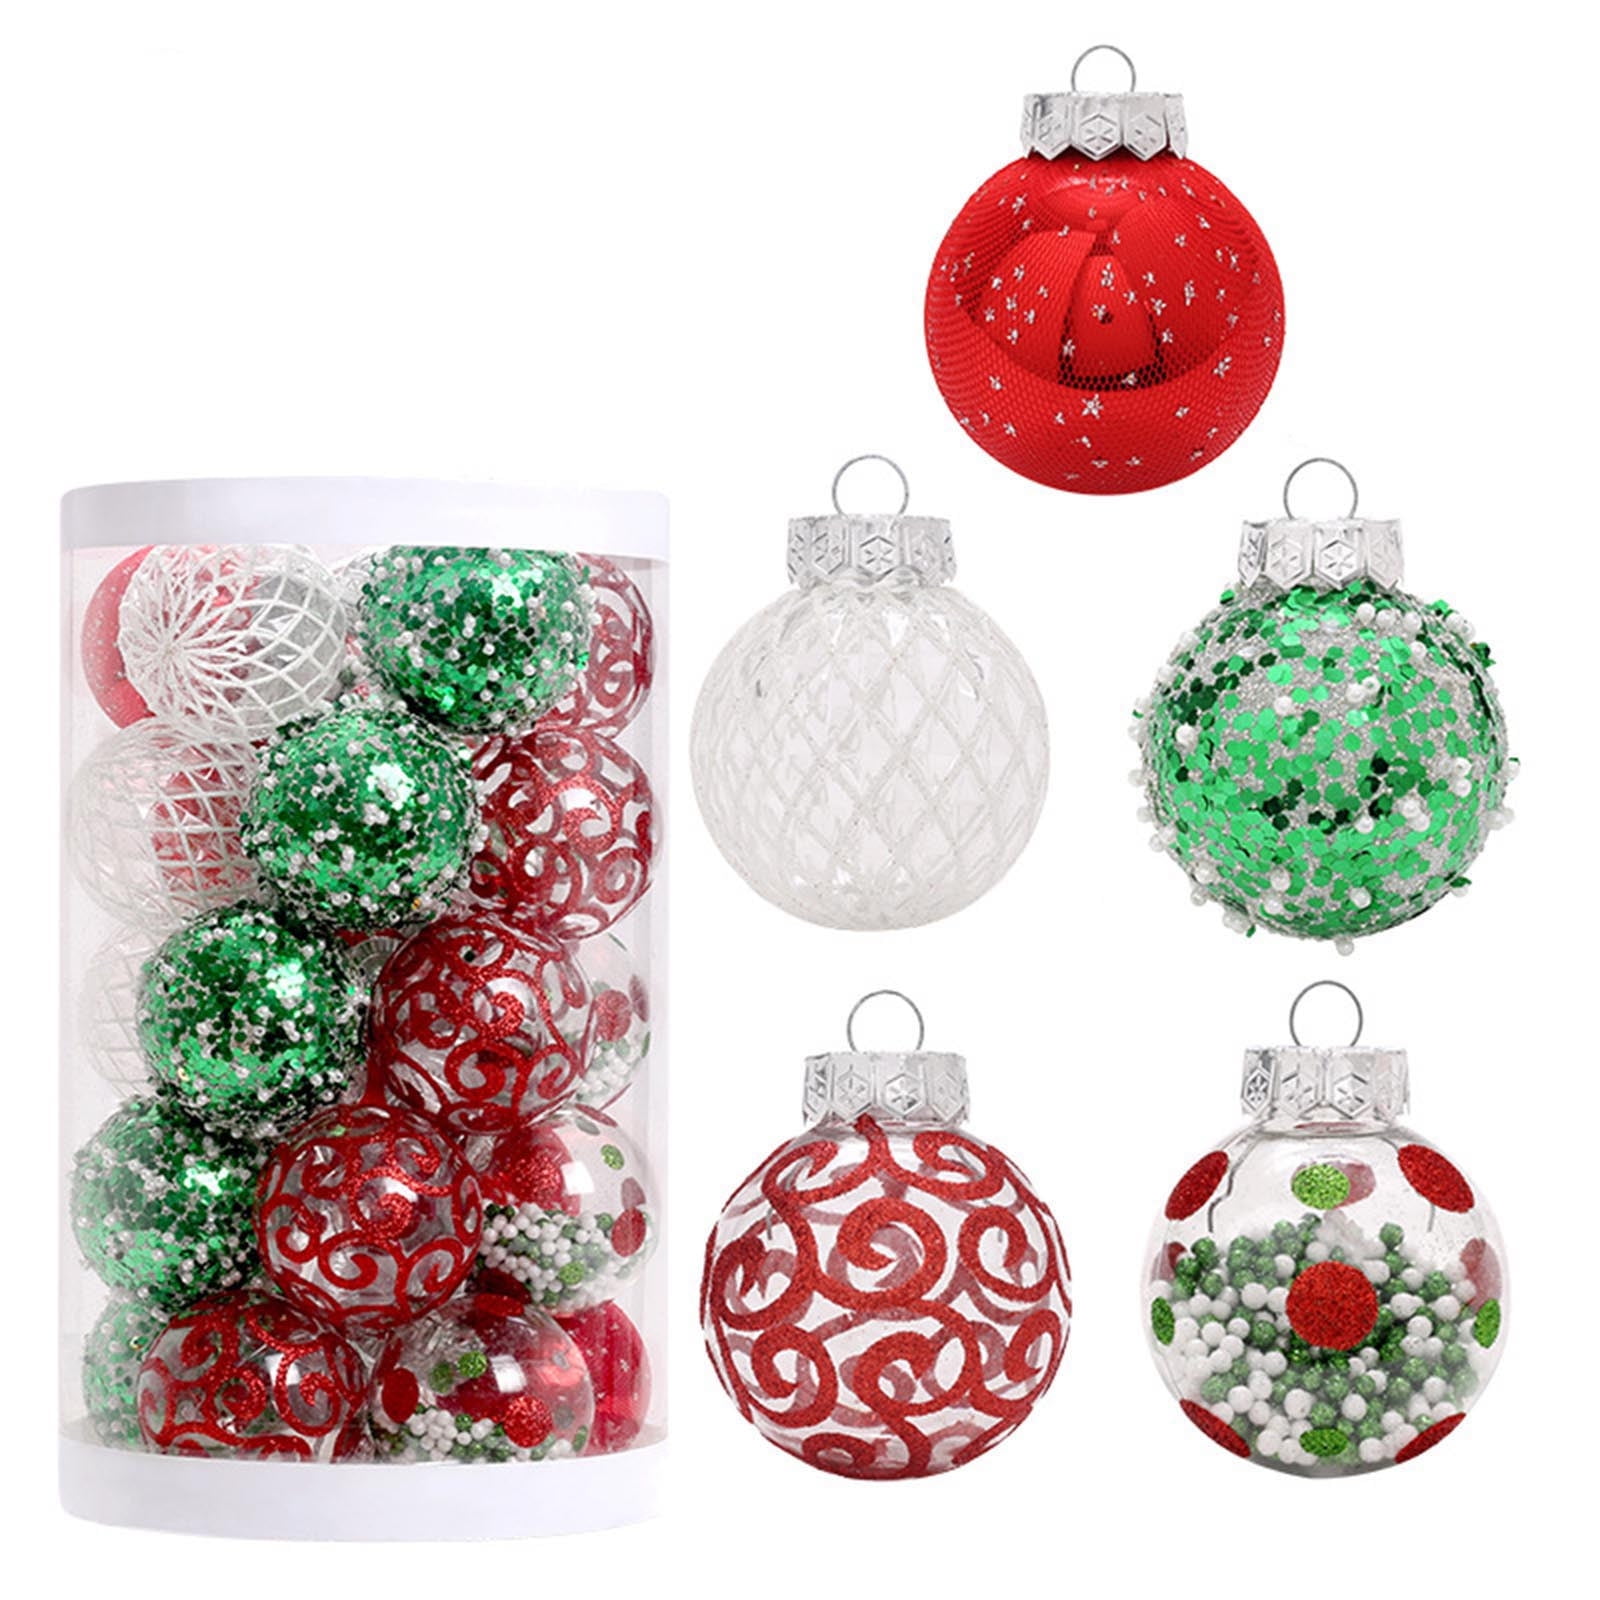 Jarcgoer 1 Christmas Balls Ornaments，25 Pcs Shatterproof